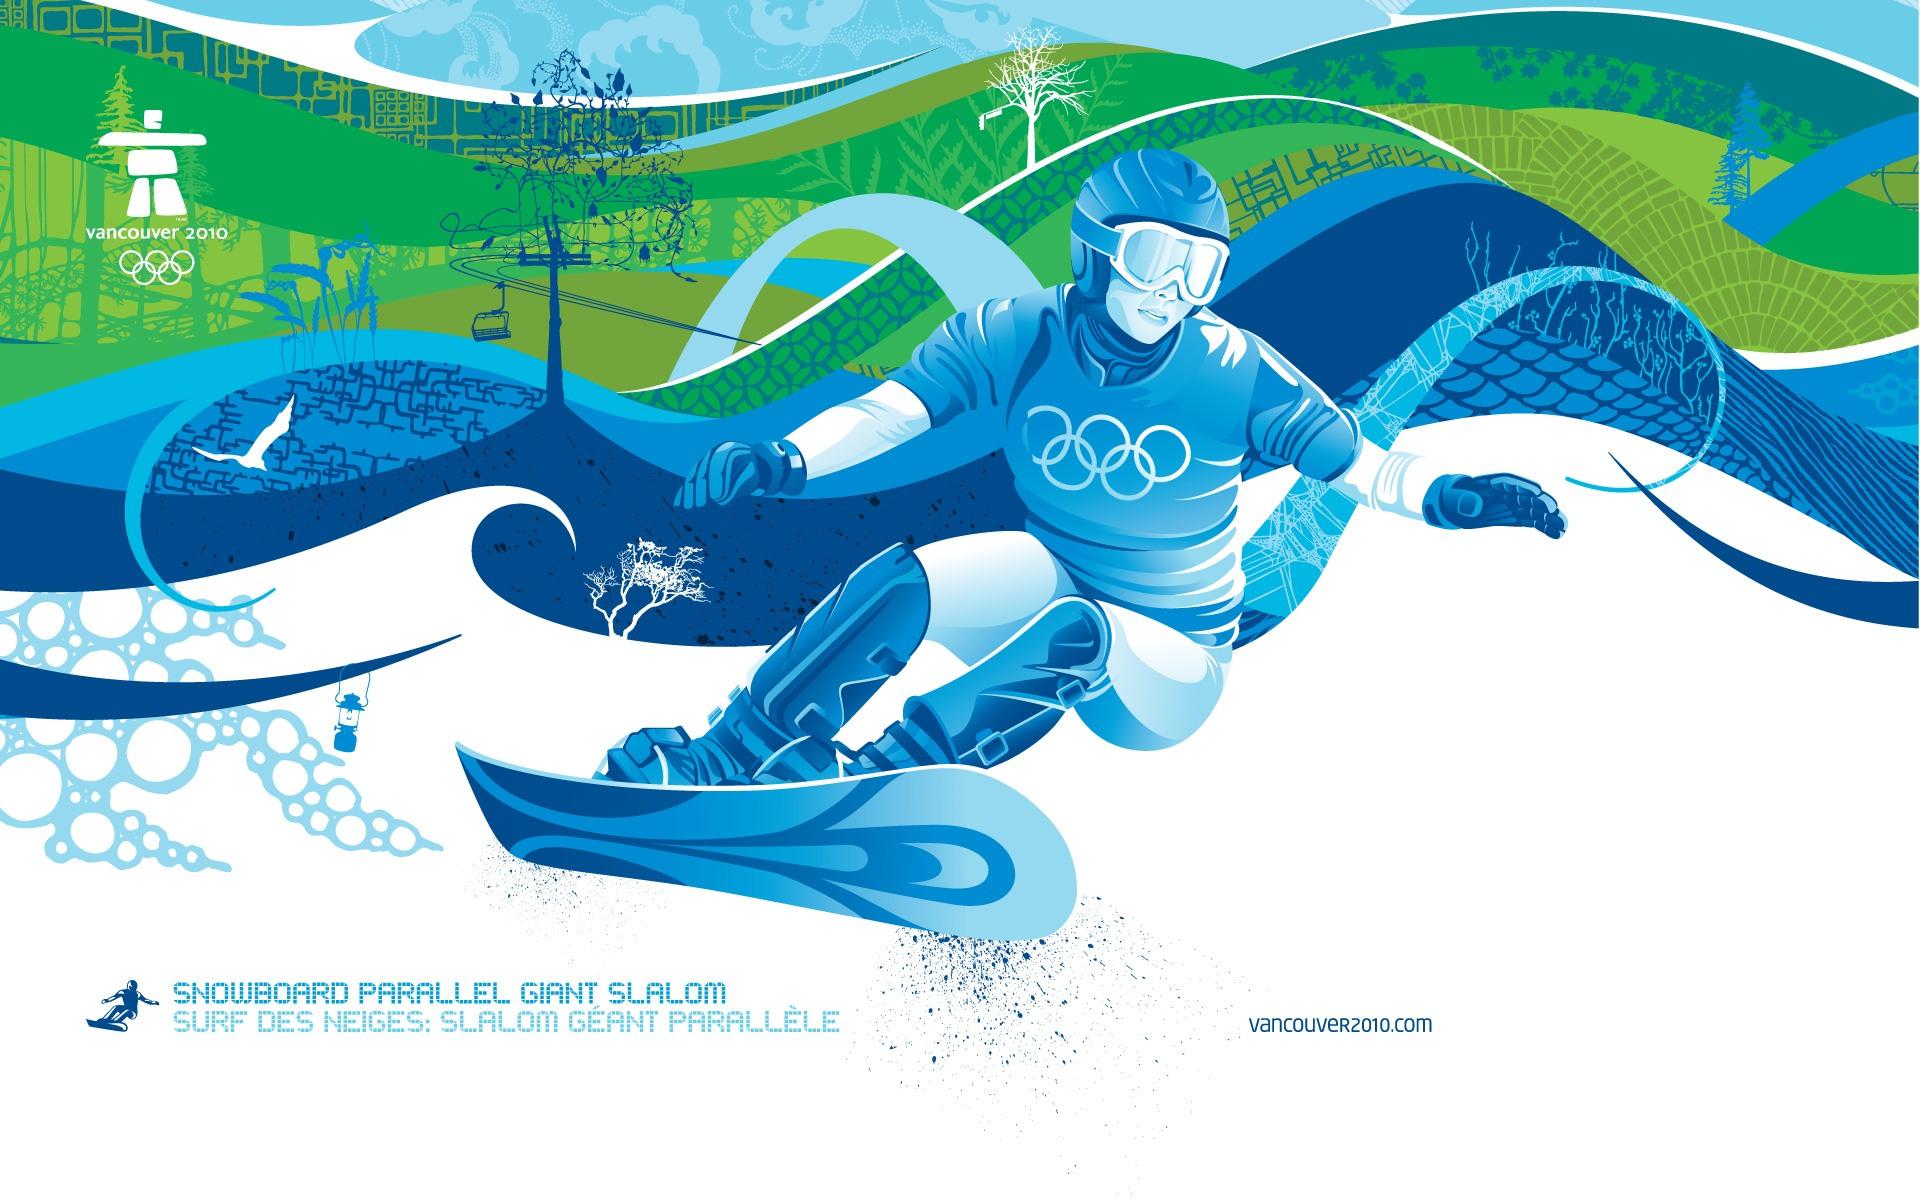 Winter Olympics HD Wallpaper